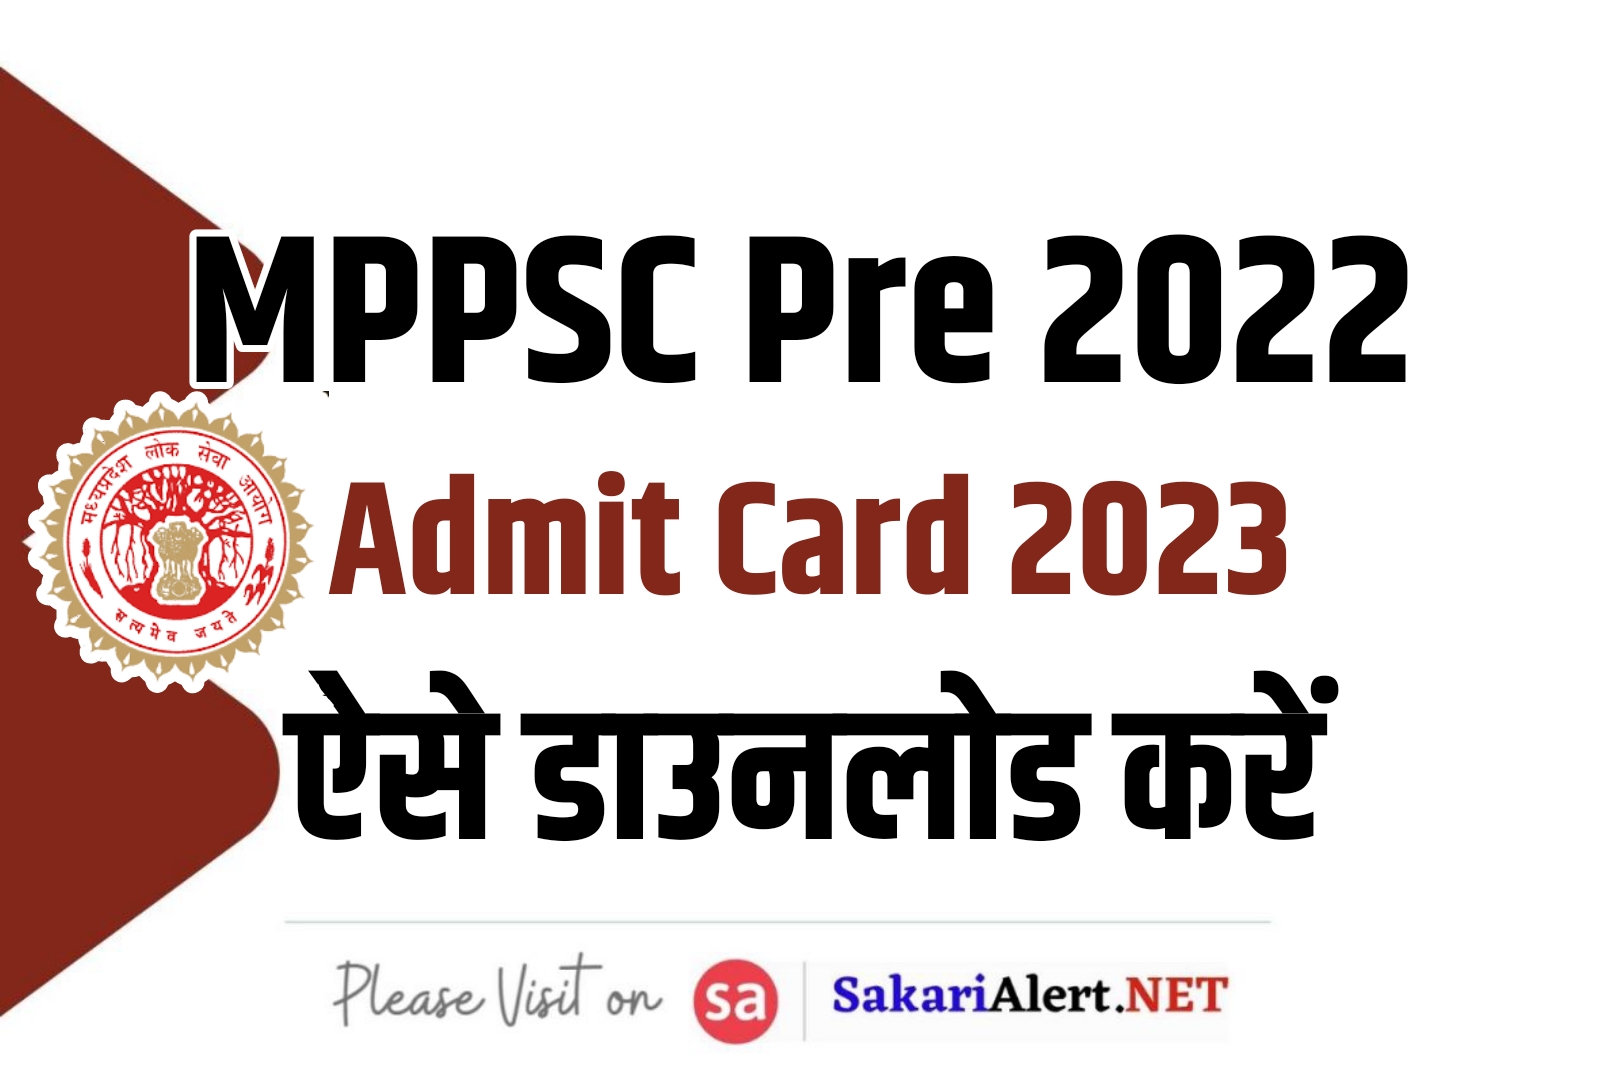 MPPSC Pre 2022 Admit Card